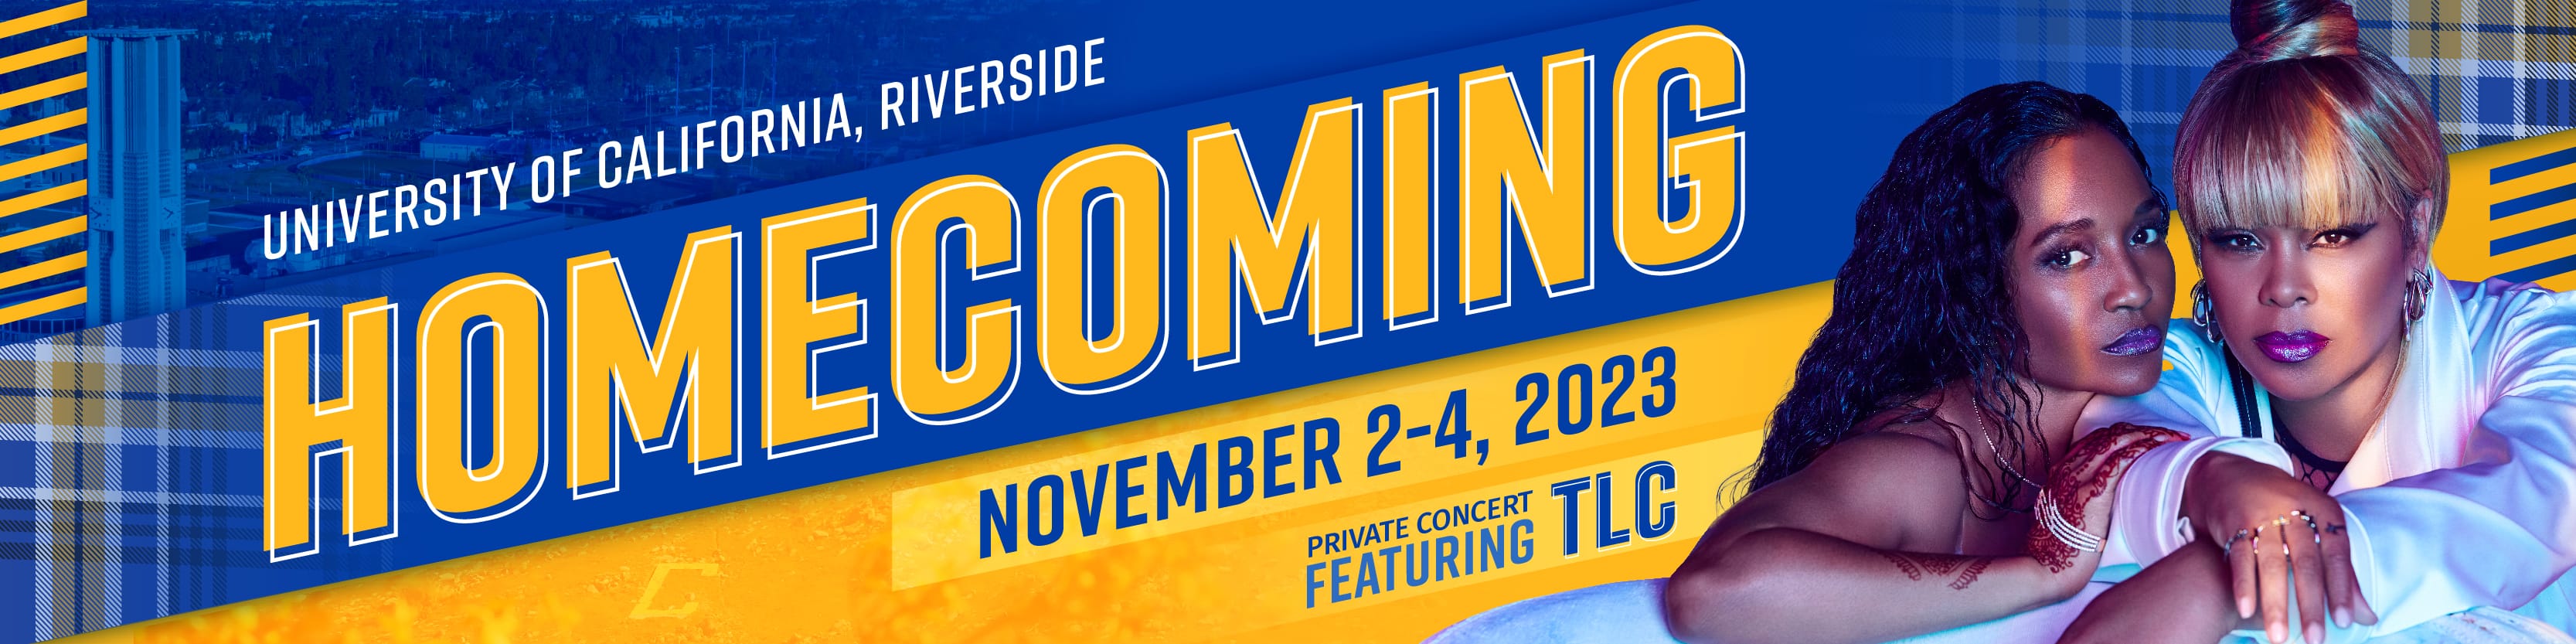 University of California, Riverside's Homecoming! November 2-4, 2023